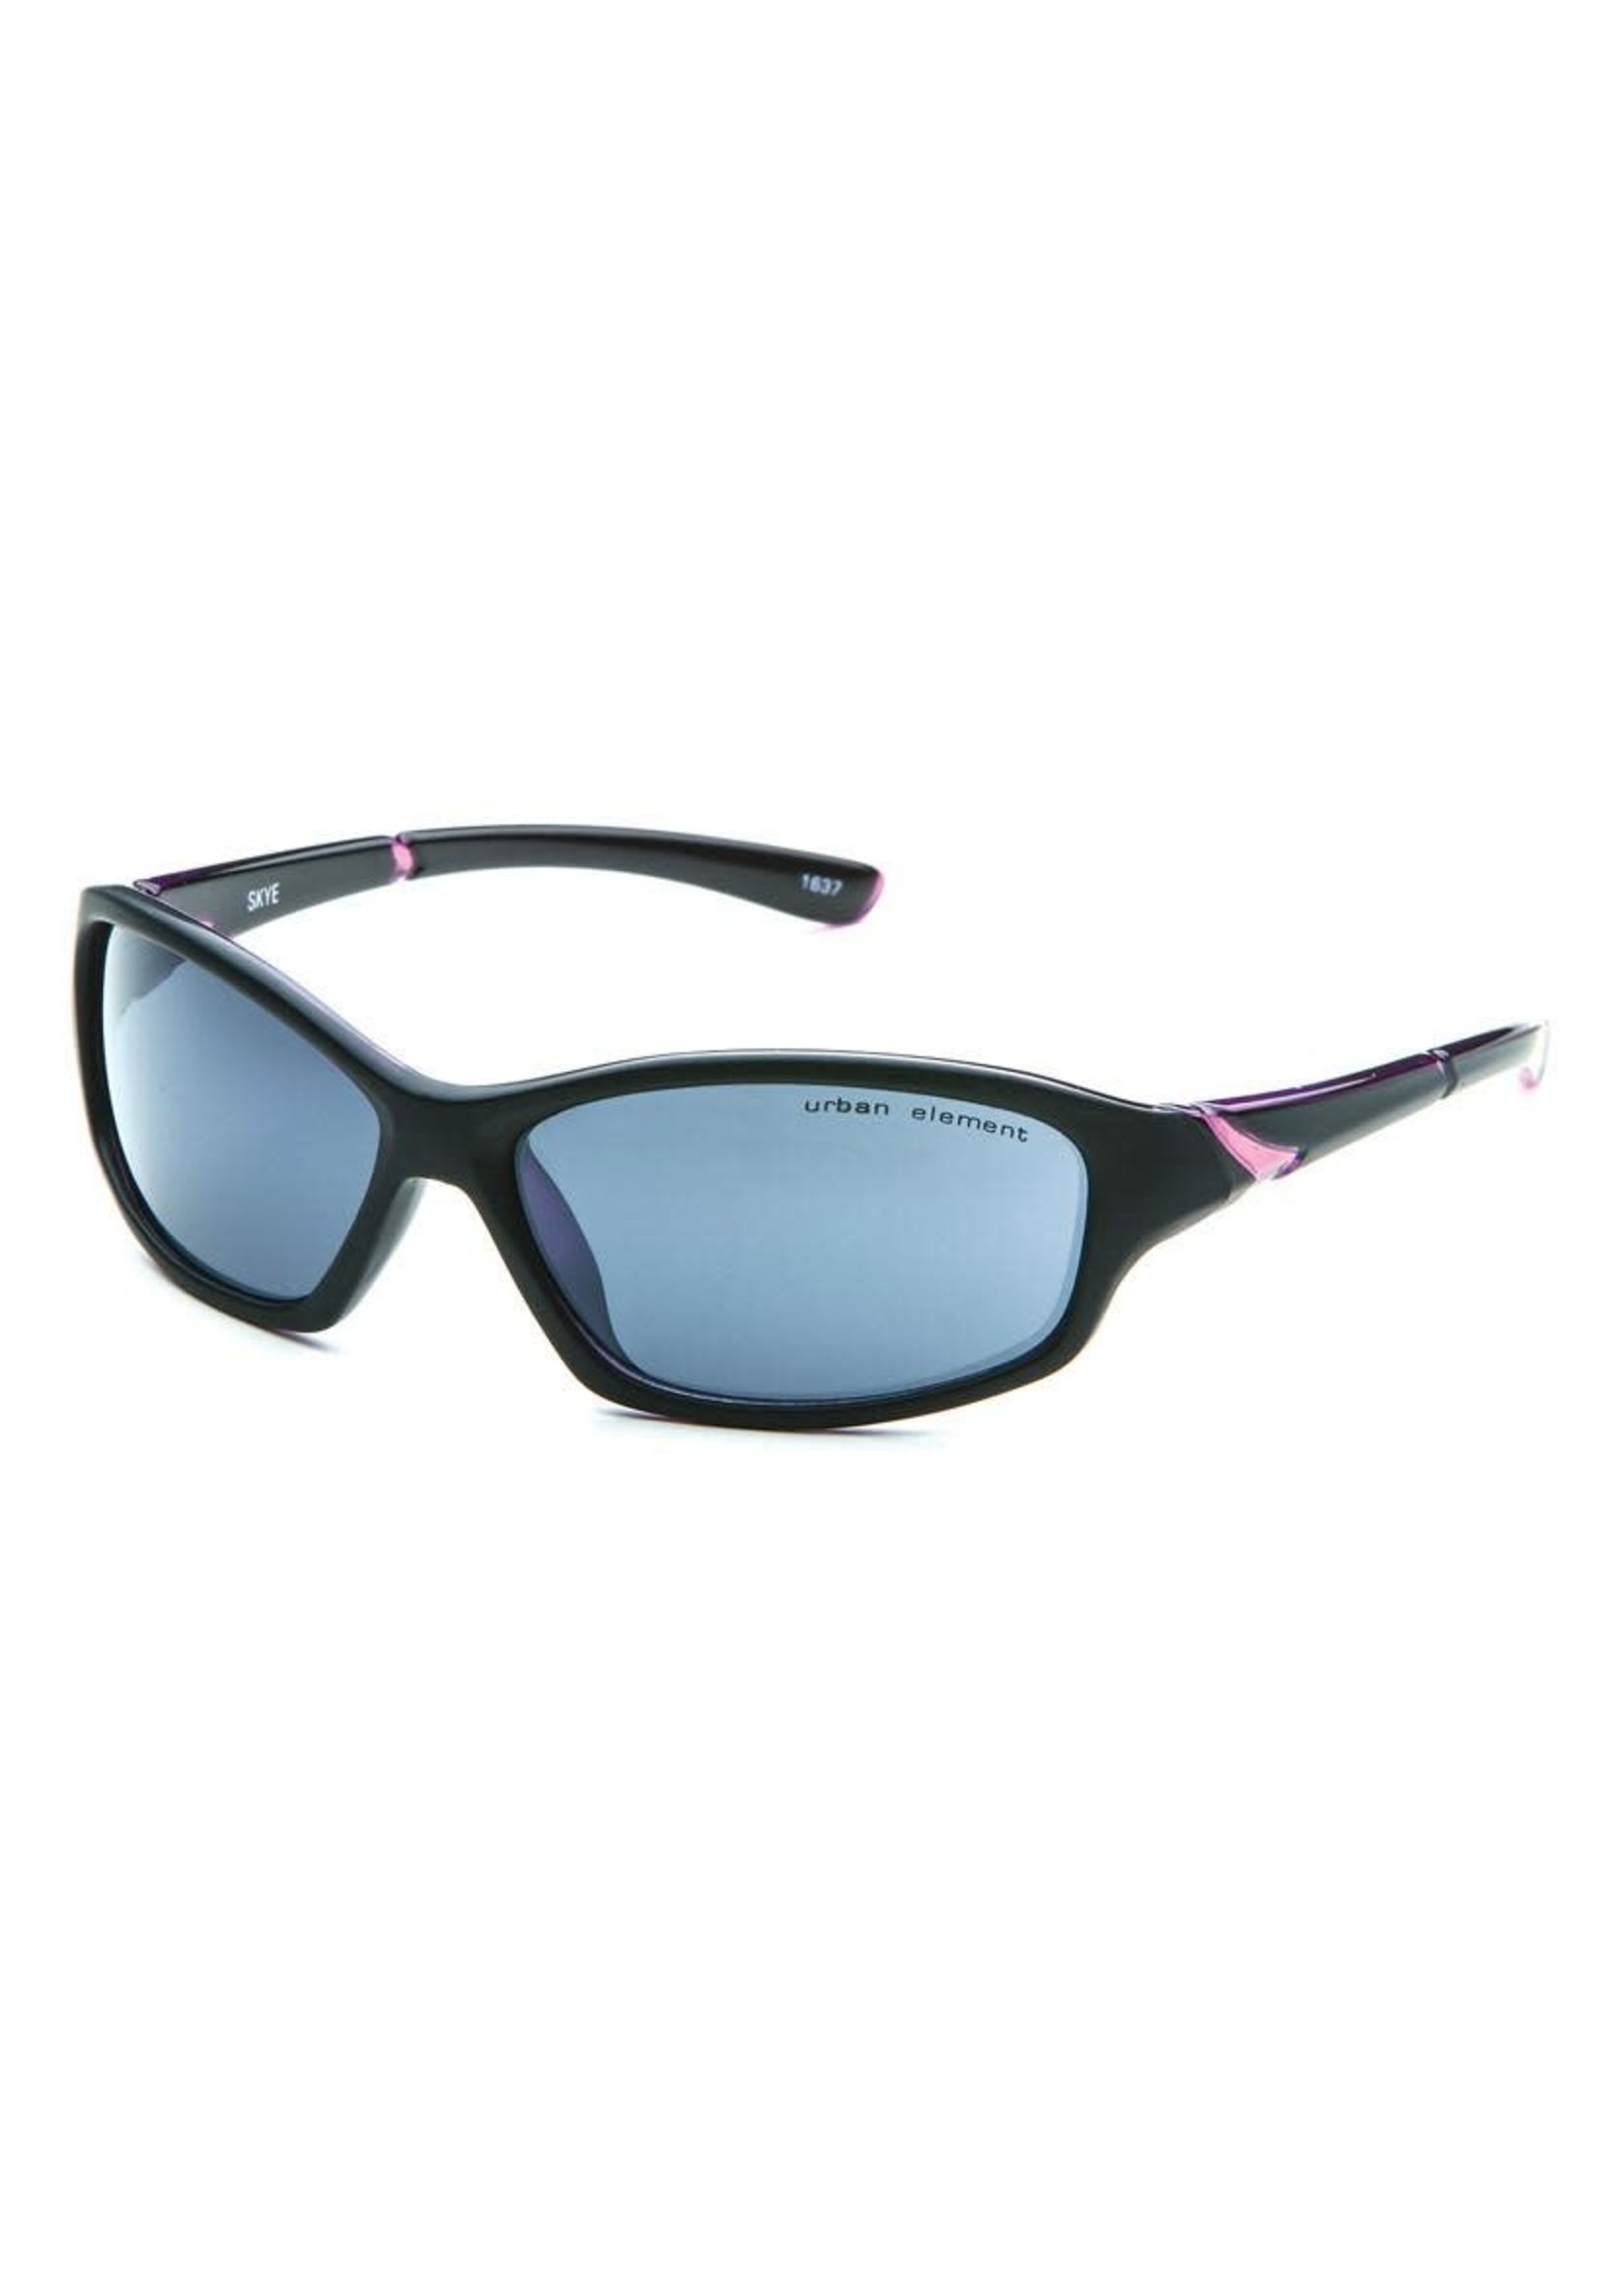 Urban Element Urban Element Premium Sport Sunglasses Women's